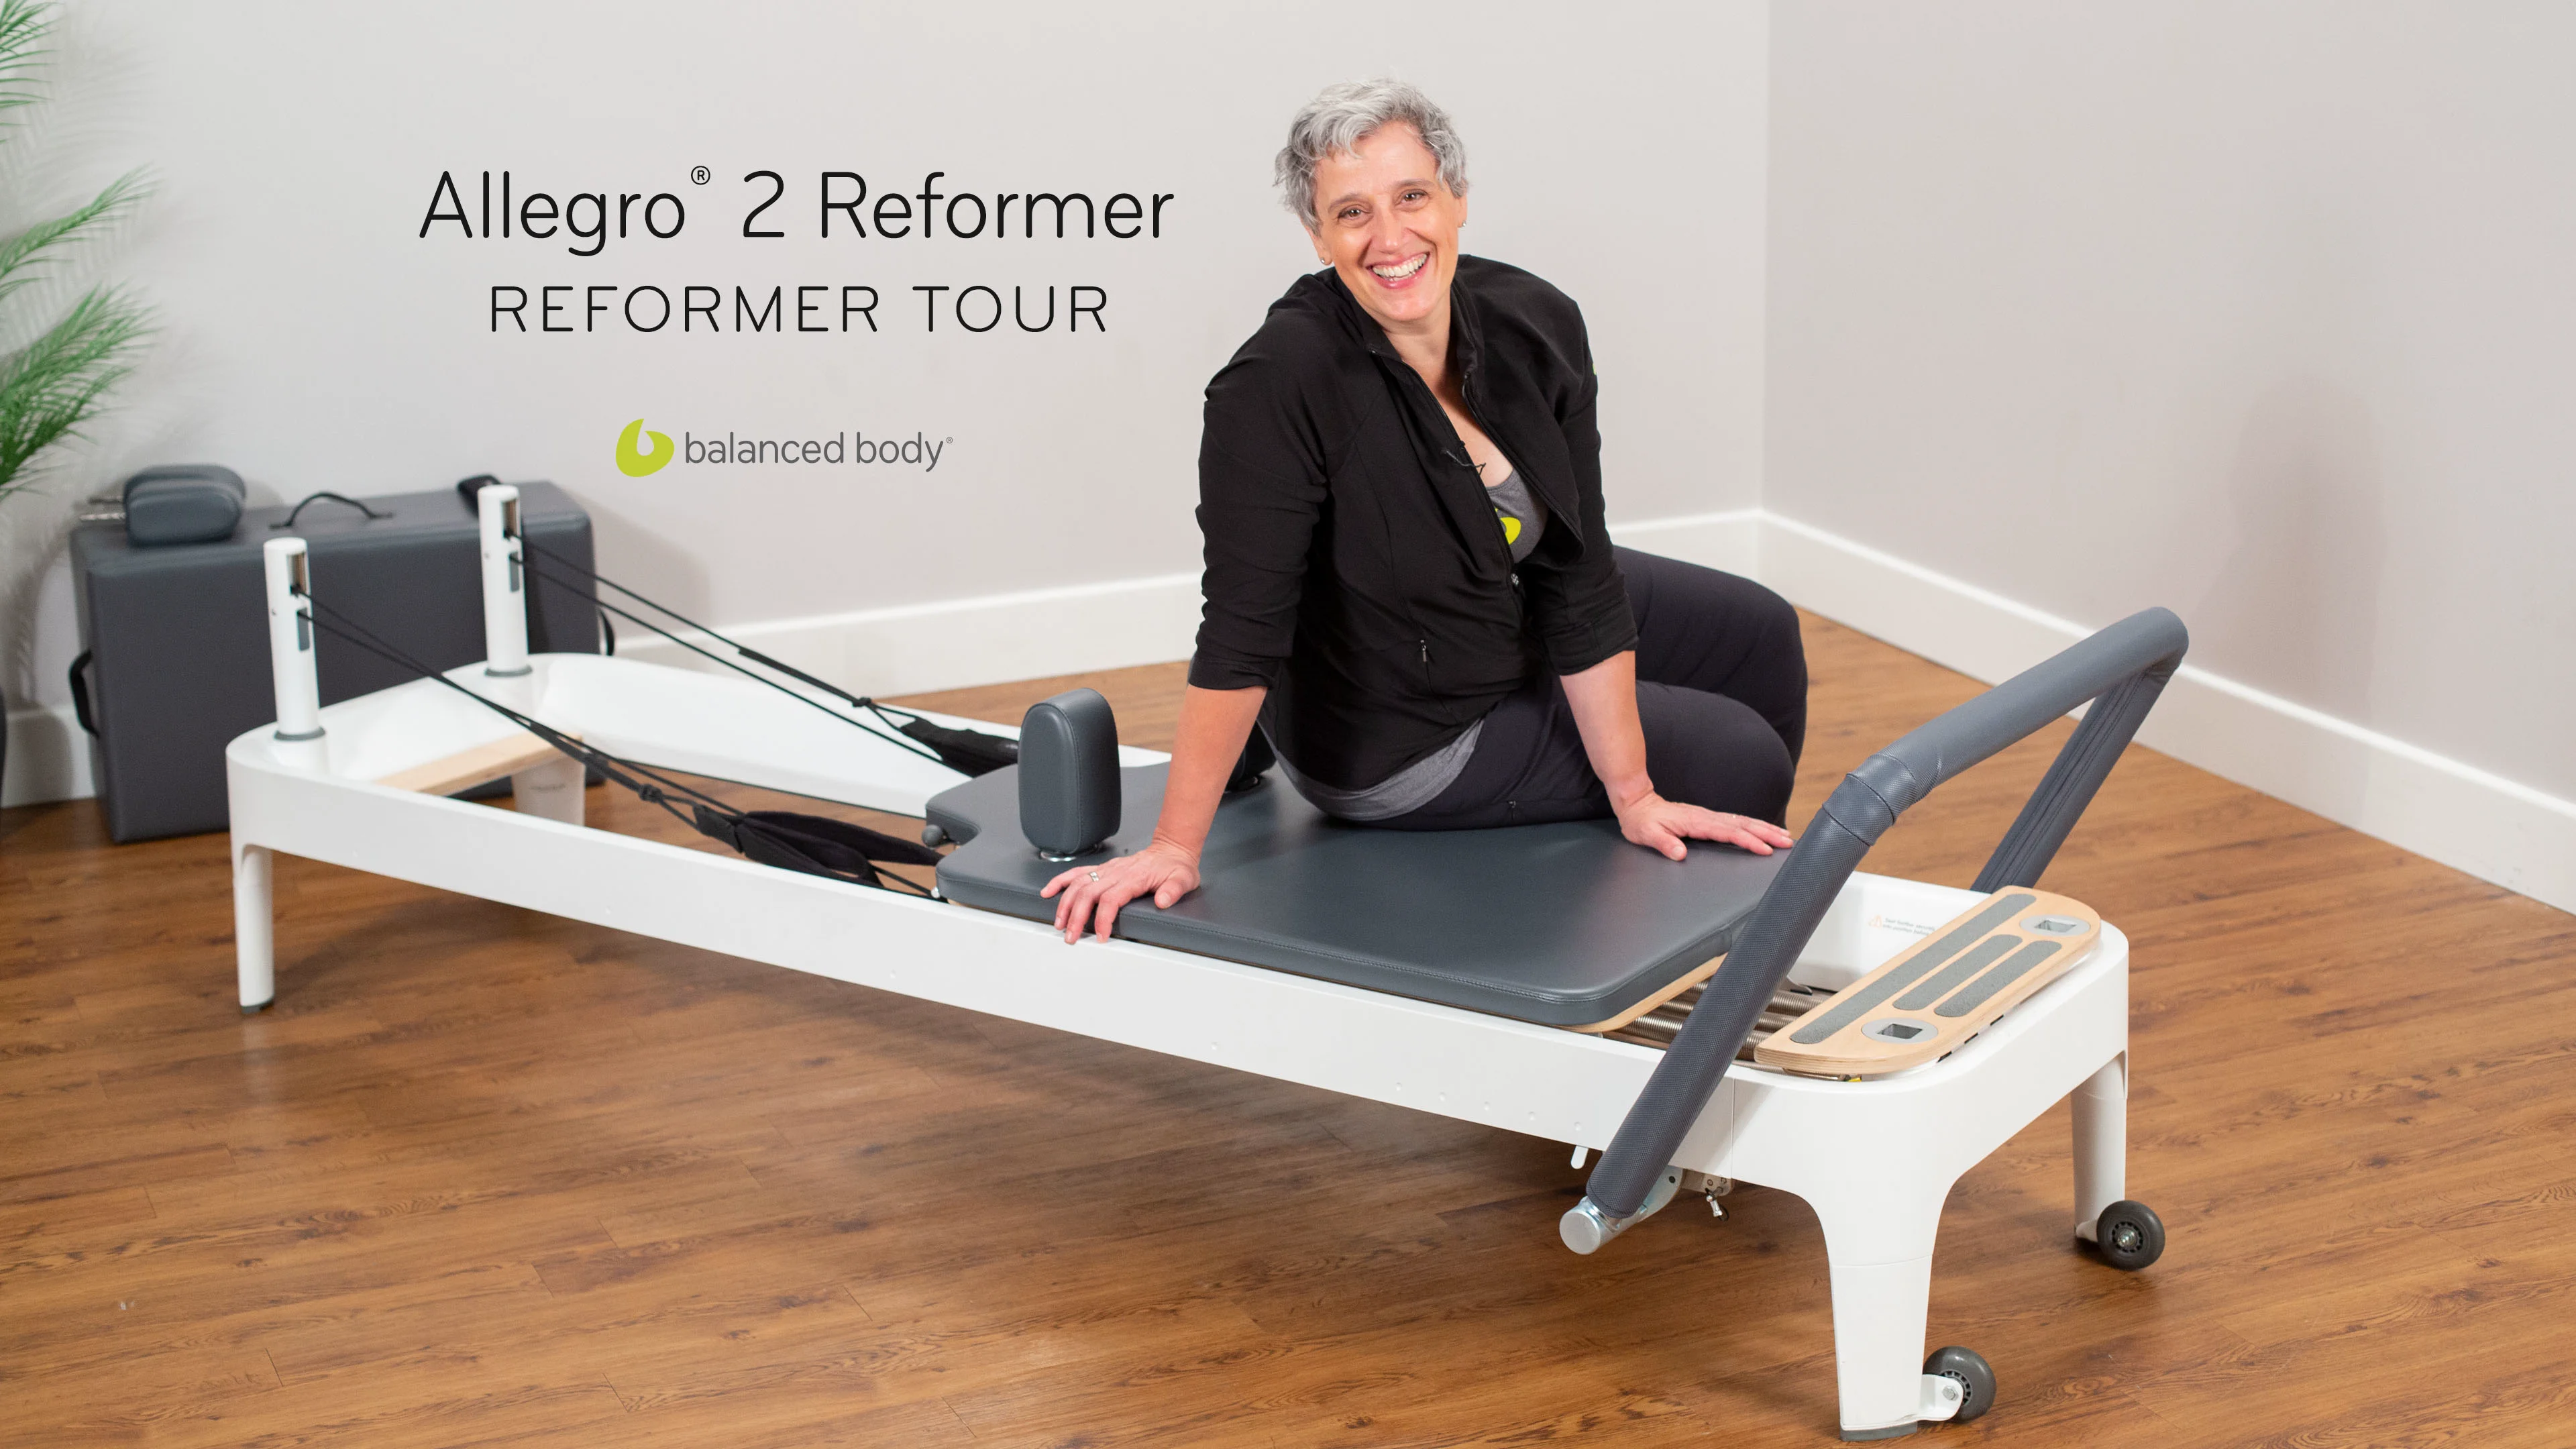 Pilates Reformer Introduction: Allegro® 2 Reformer on Vimeo